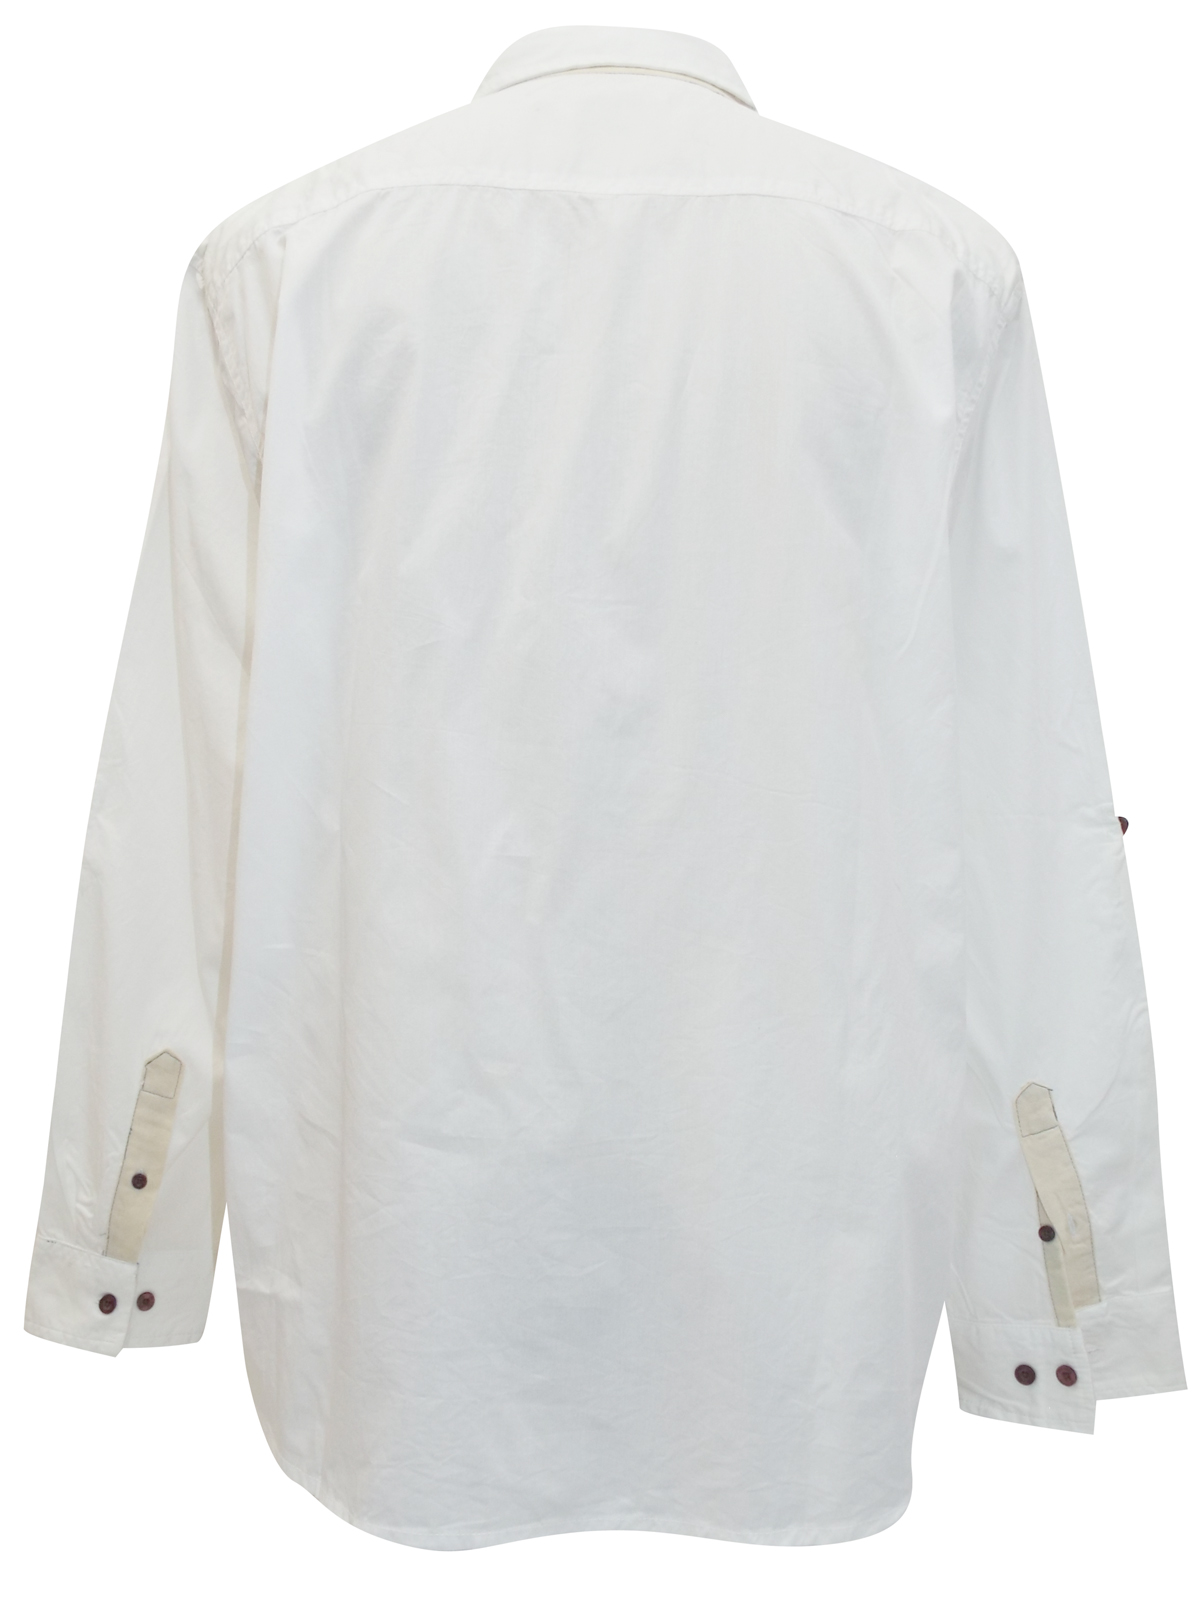 Jacamo - - Jacamo WHITE Mens Pure Cotton Military Shirt - Size Large to 3XL